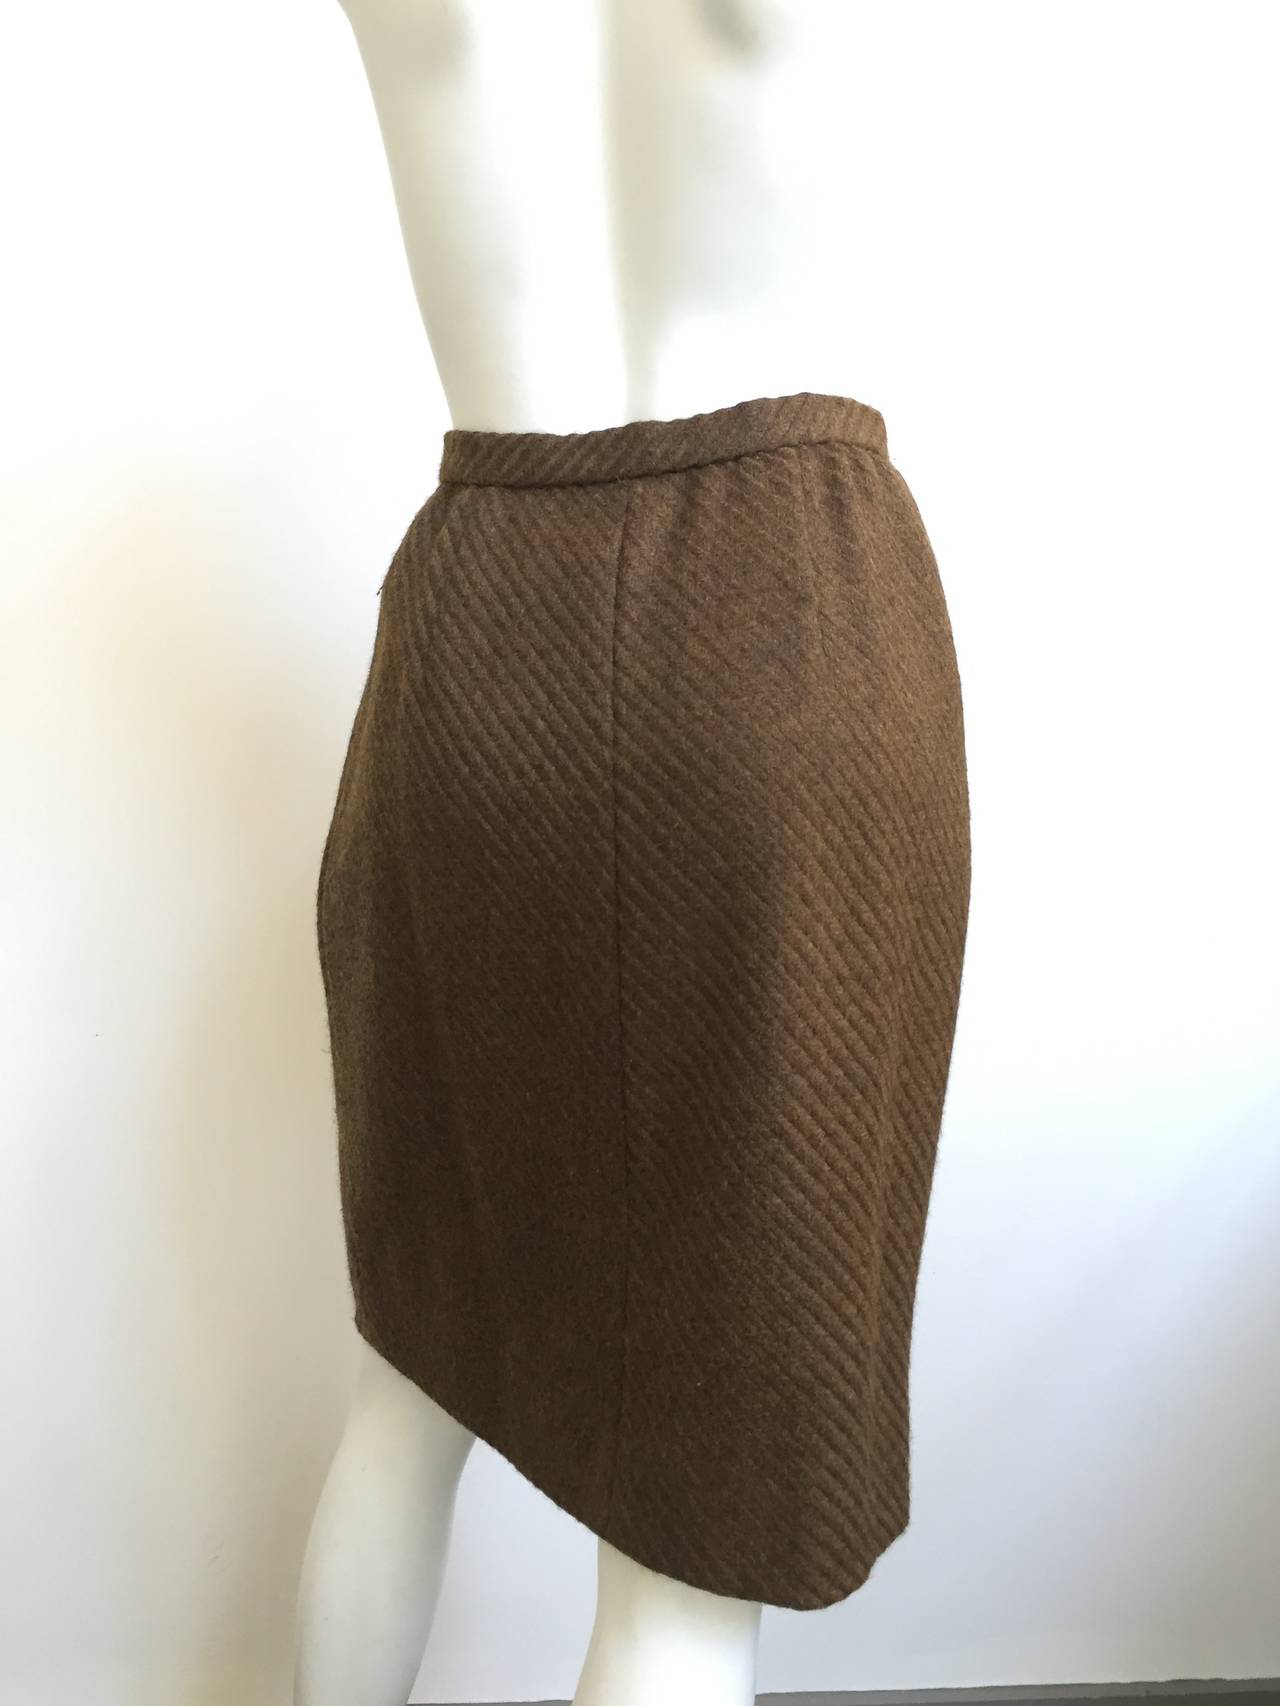 Carolina Herrera 90s Brown Wool Skirt Size 6. For Sale 3